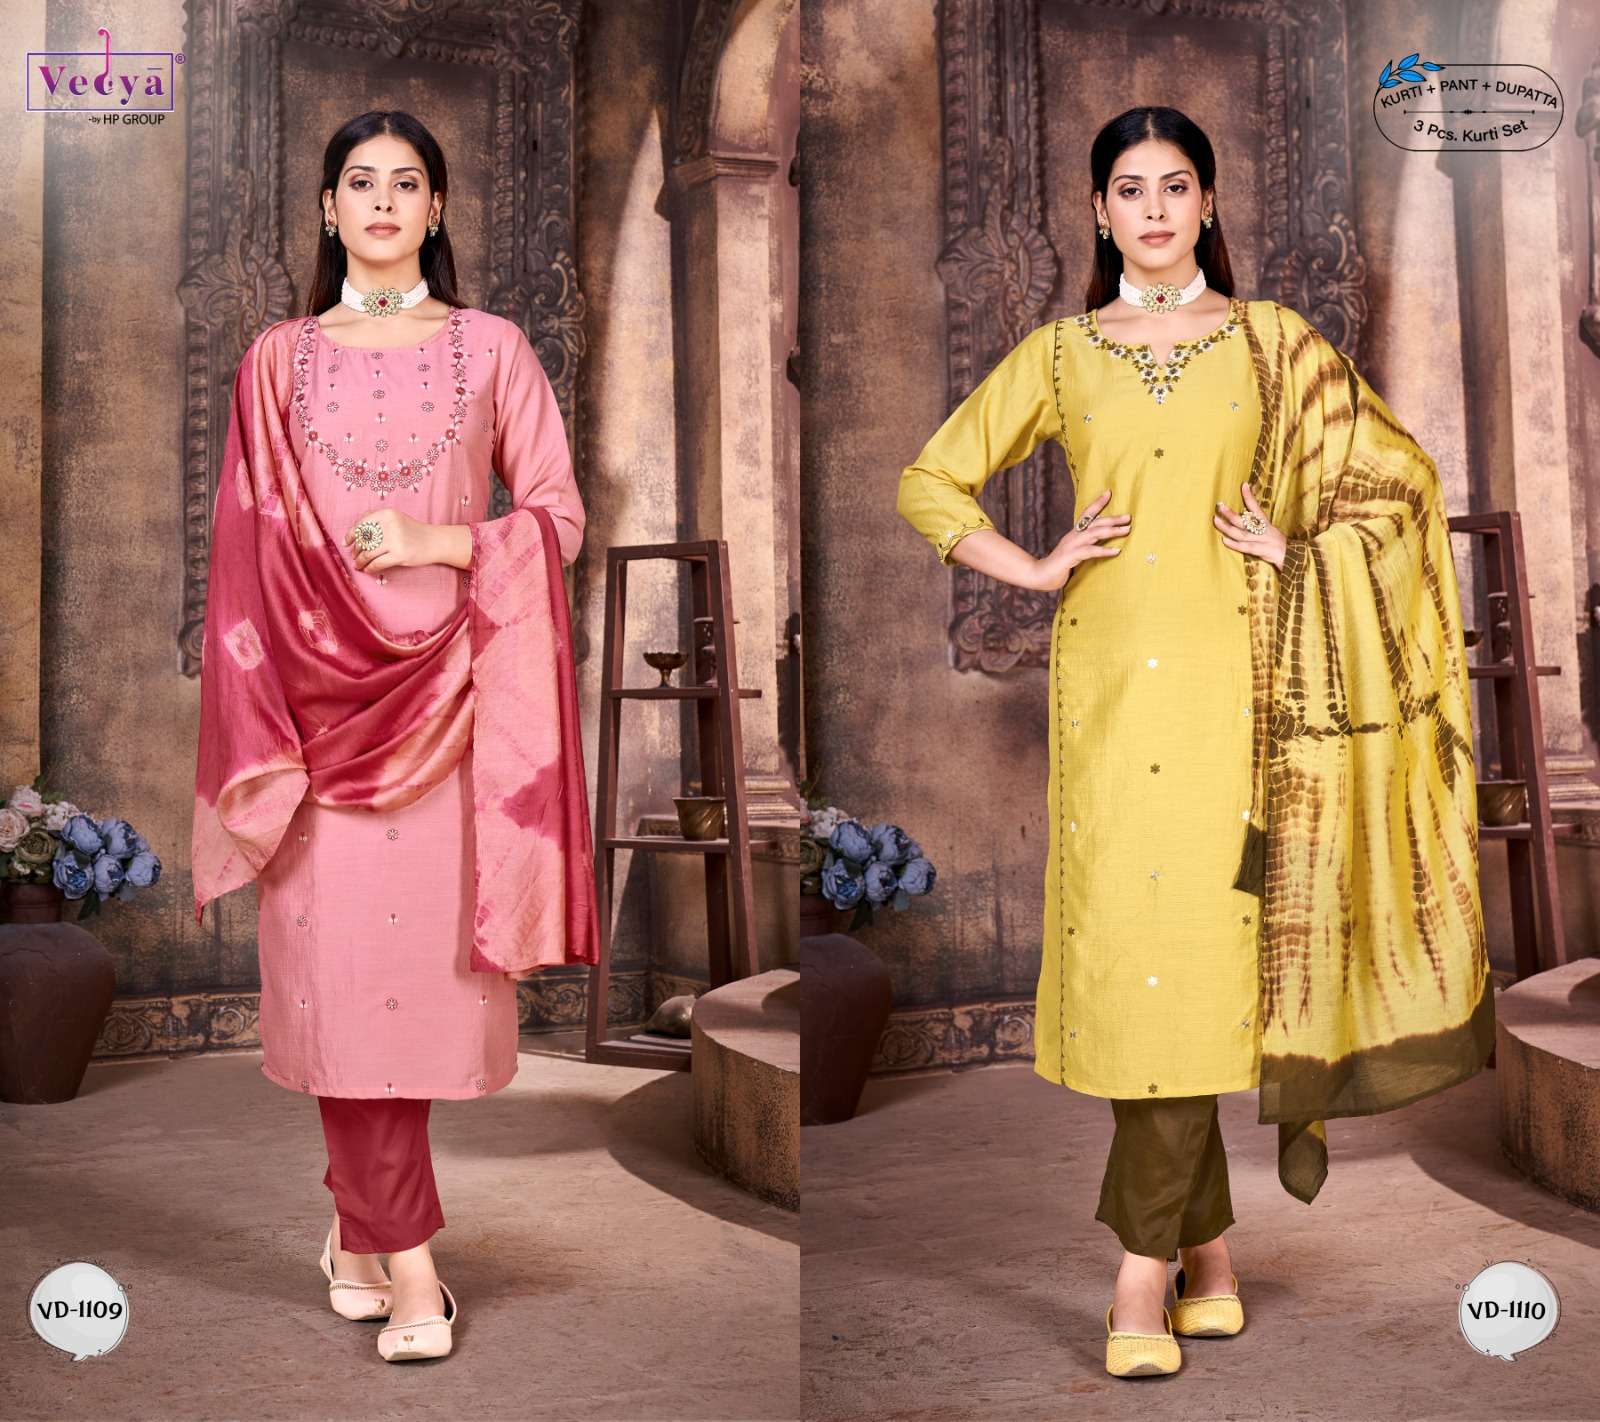 vedya by rinaaz 1105-1110 series chinon silk embroidred stich kurti pant set catalogue wholesaler 